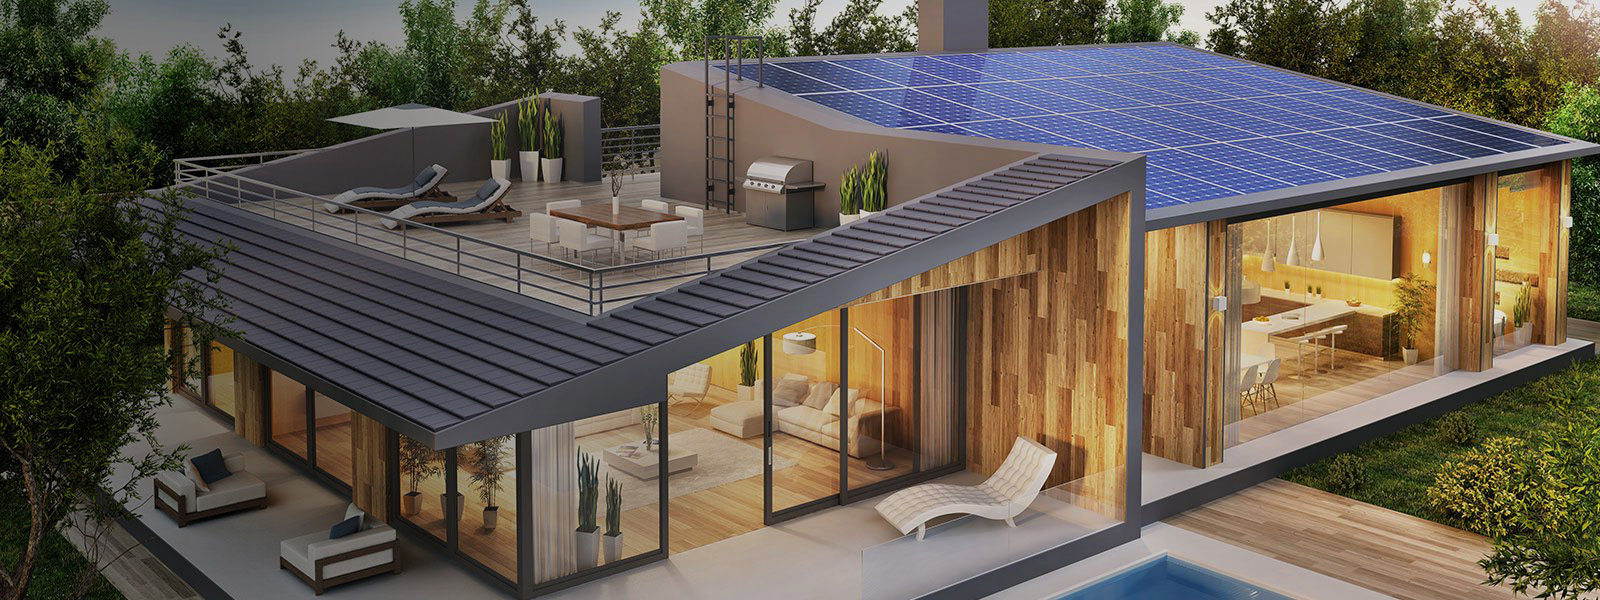 Residential Solar System | Solar for Home - GEE Energy